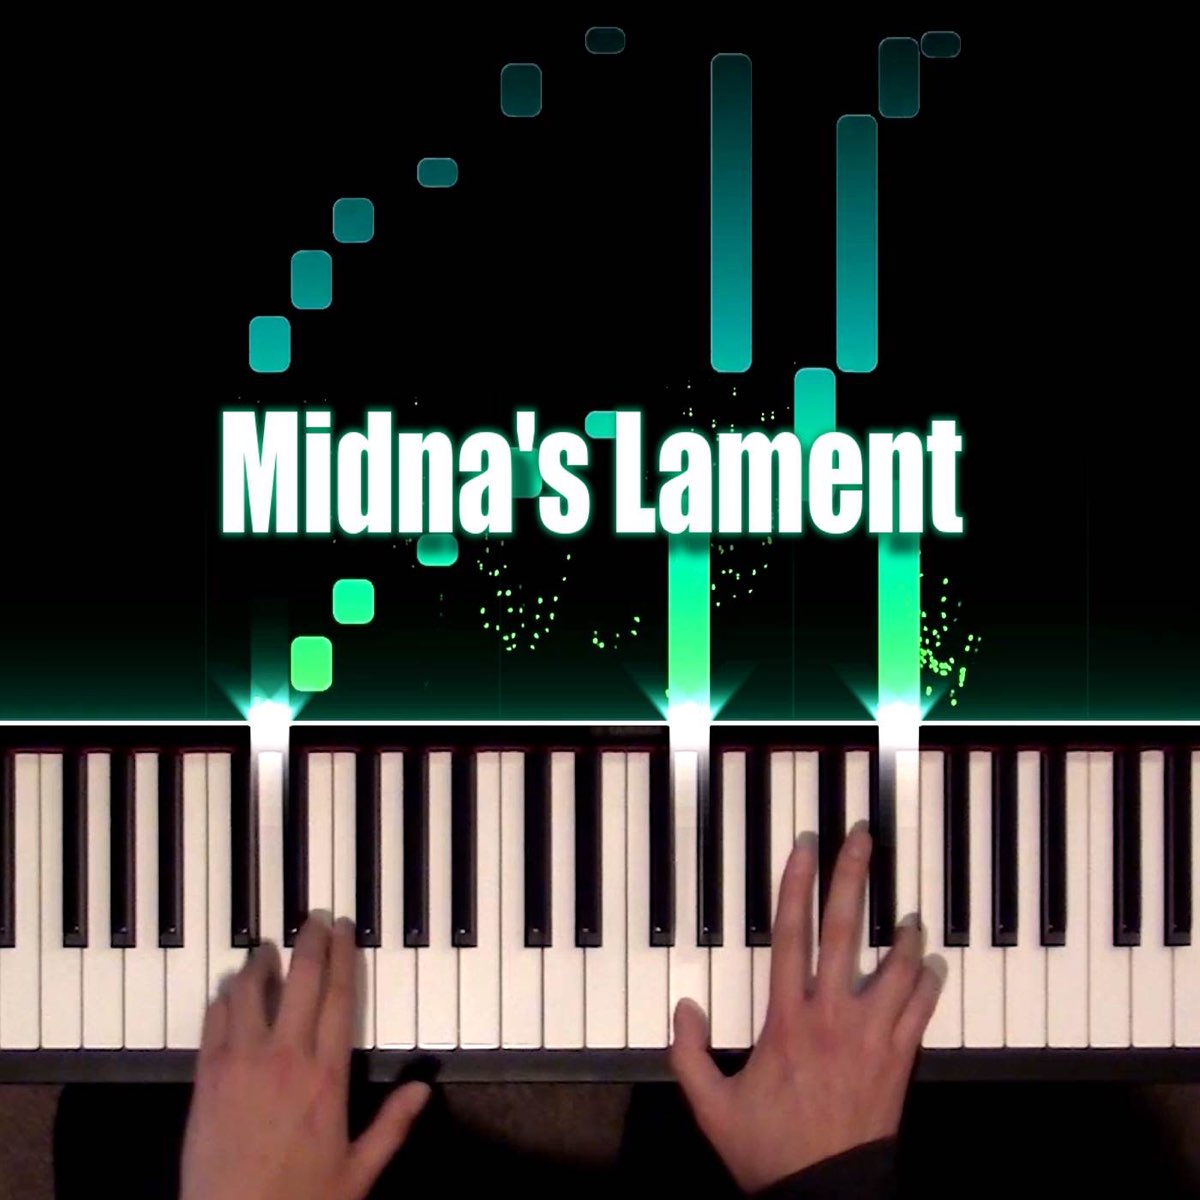 Midna's Lament (From "the Legend of Zelda: Twilight Princess") [Piano Solo]  - Single de Erik Correll en Apple Music